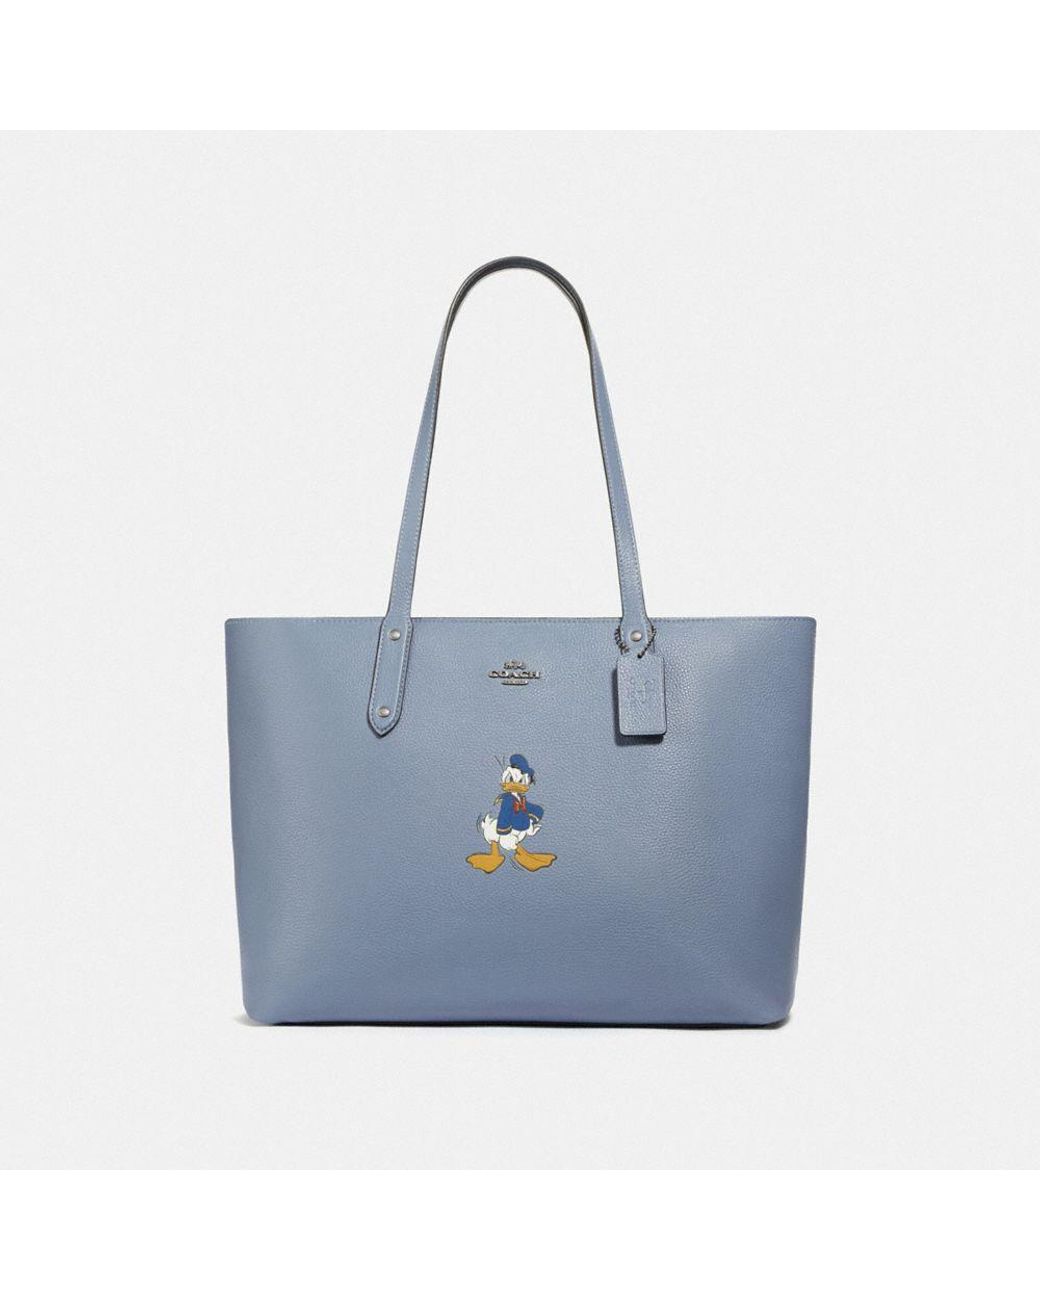 Donald Duck Tote Bag | Disney purse, Bags, Duck bag